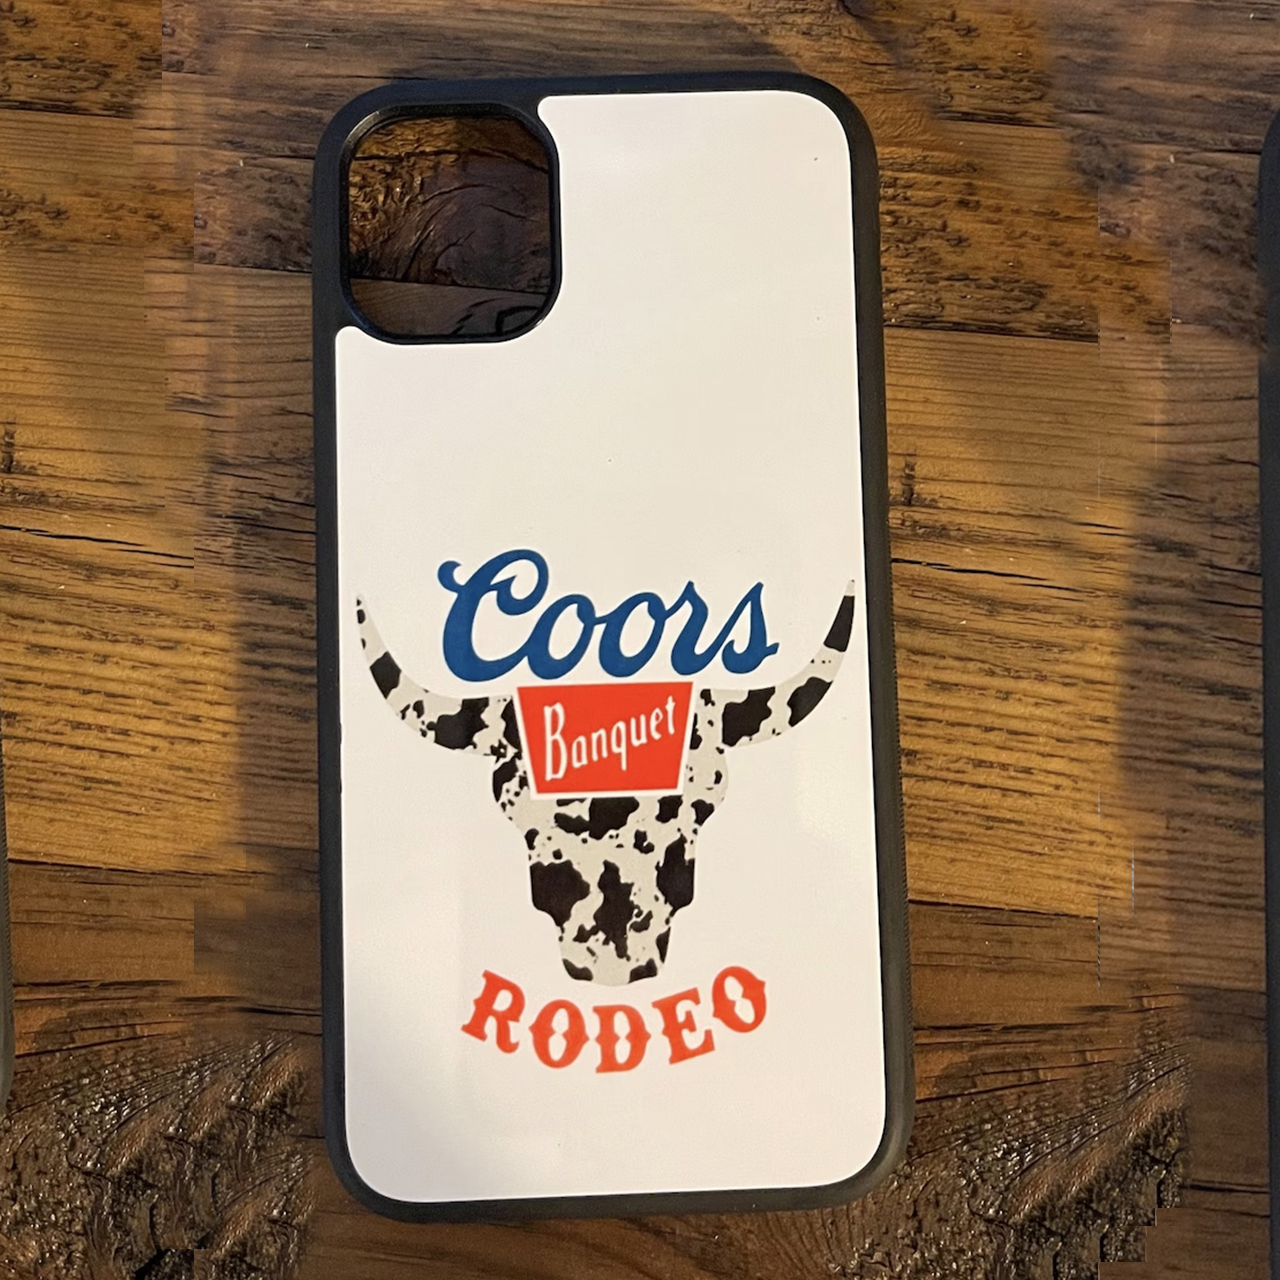 Banquet Rodeo Cowboy Phone Case